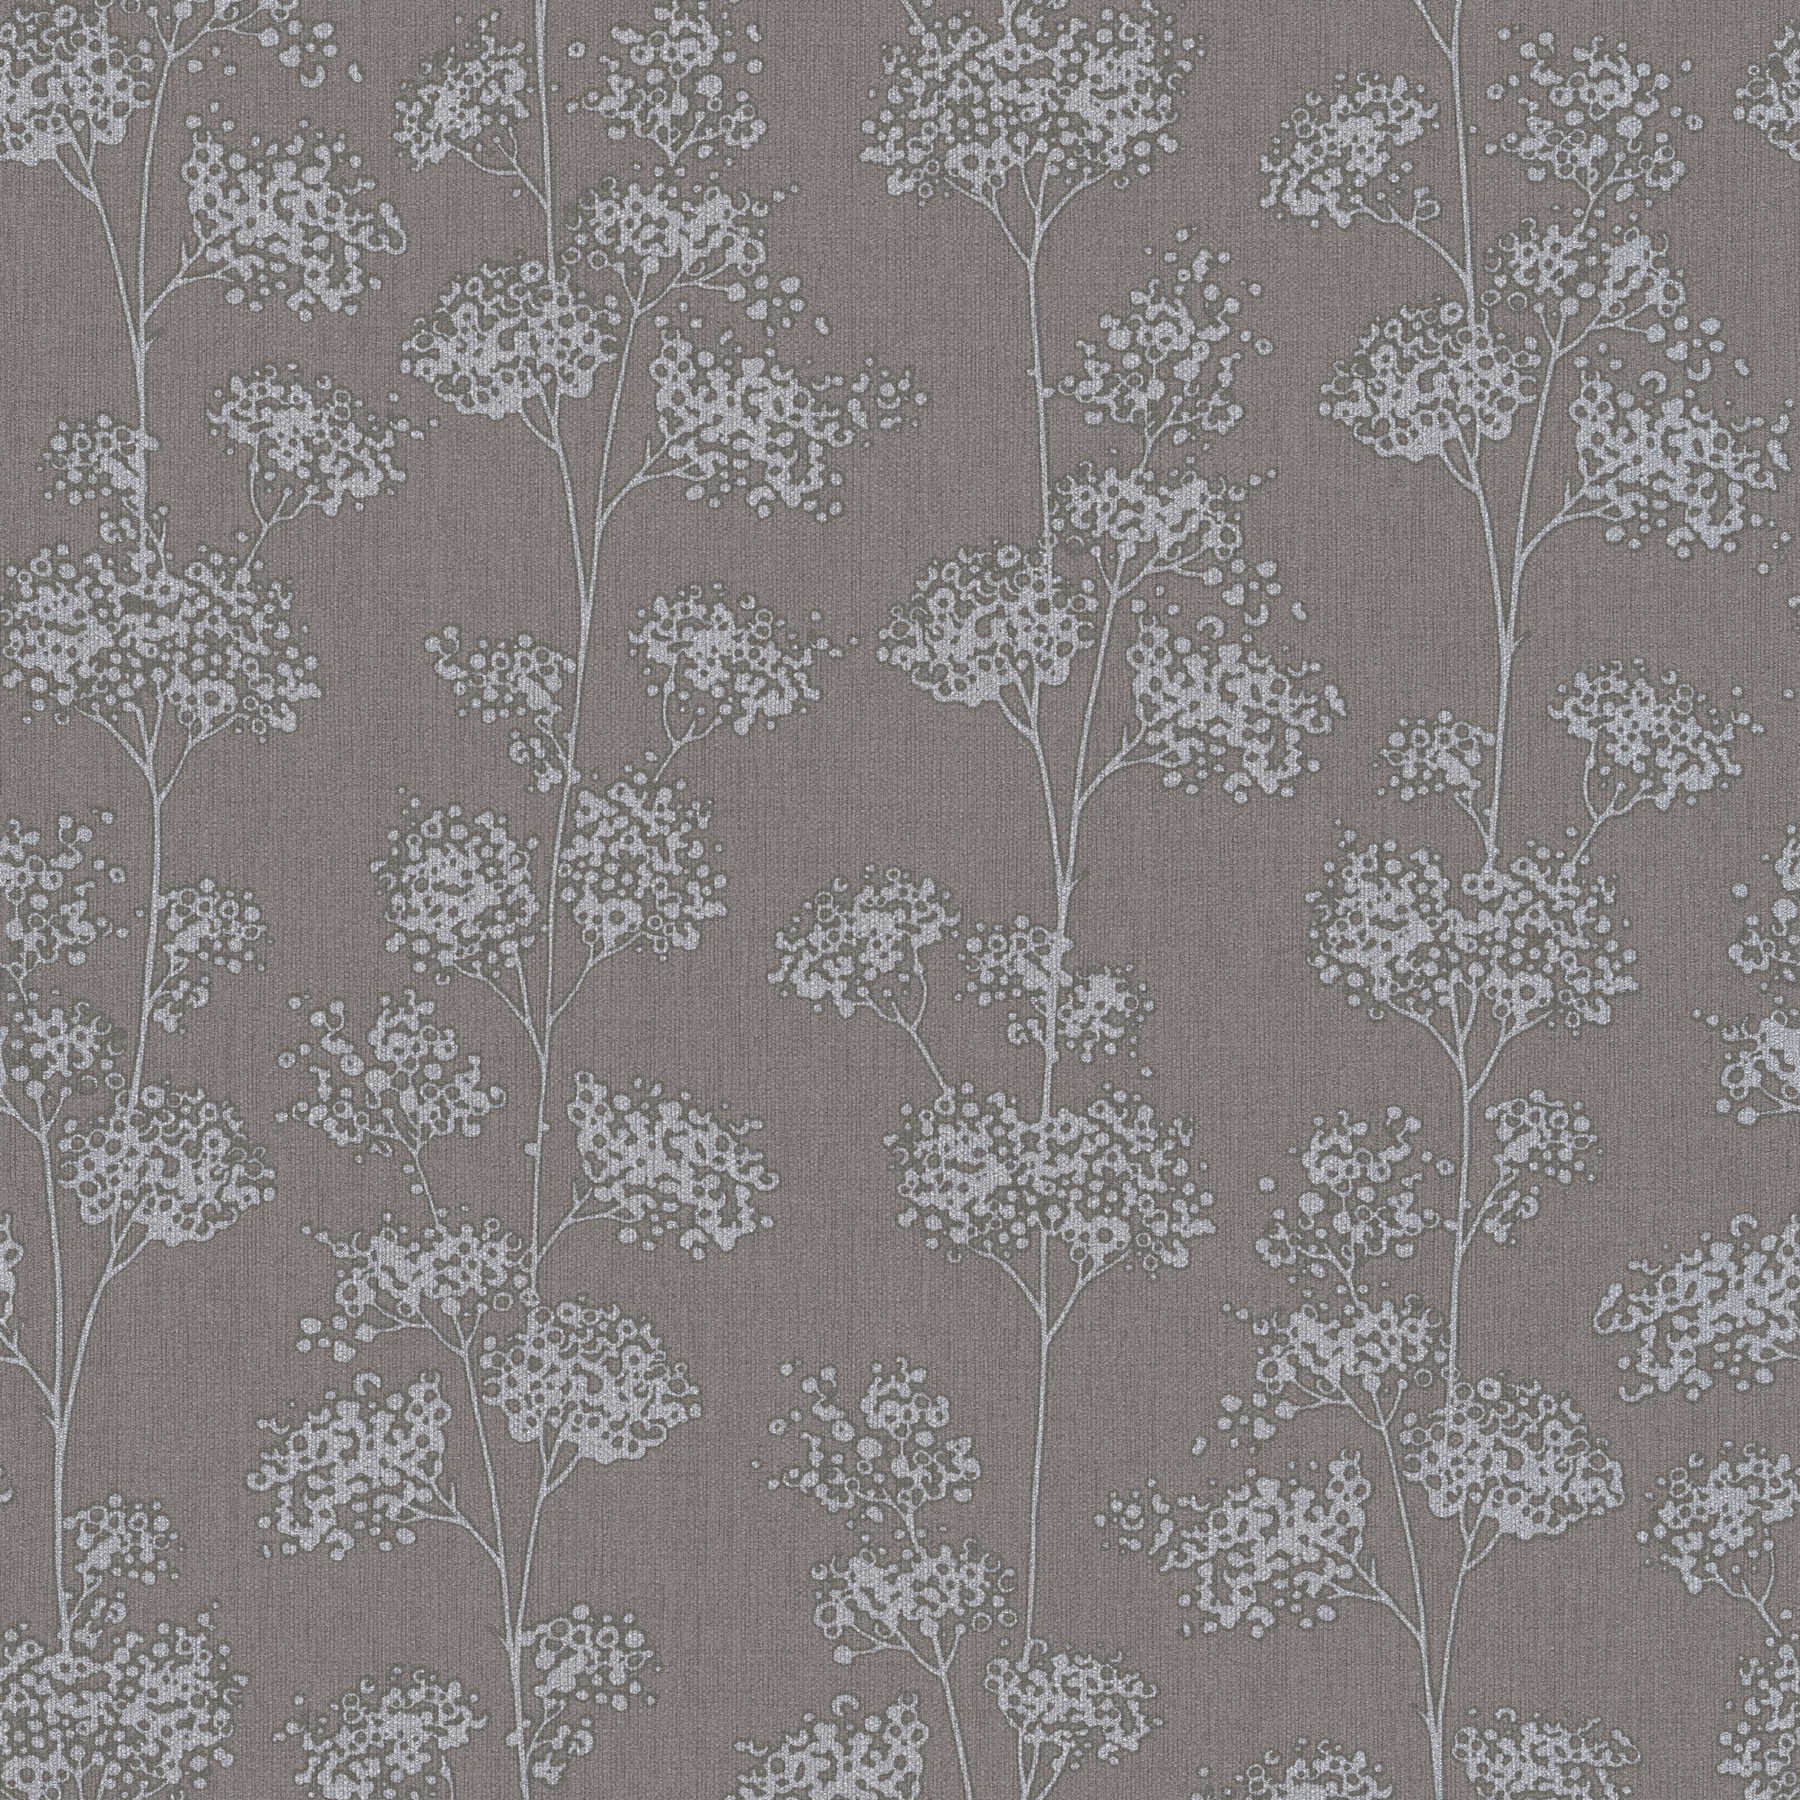 Linen optics wallpaper country style & nature motif - Brown, Metallic
